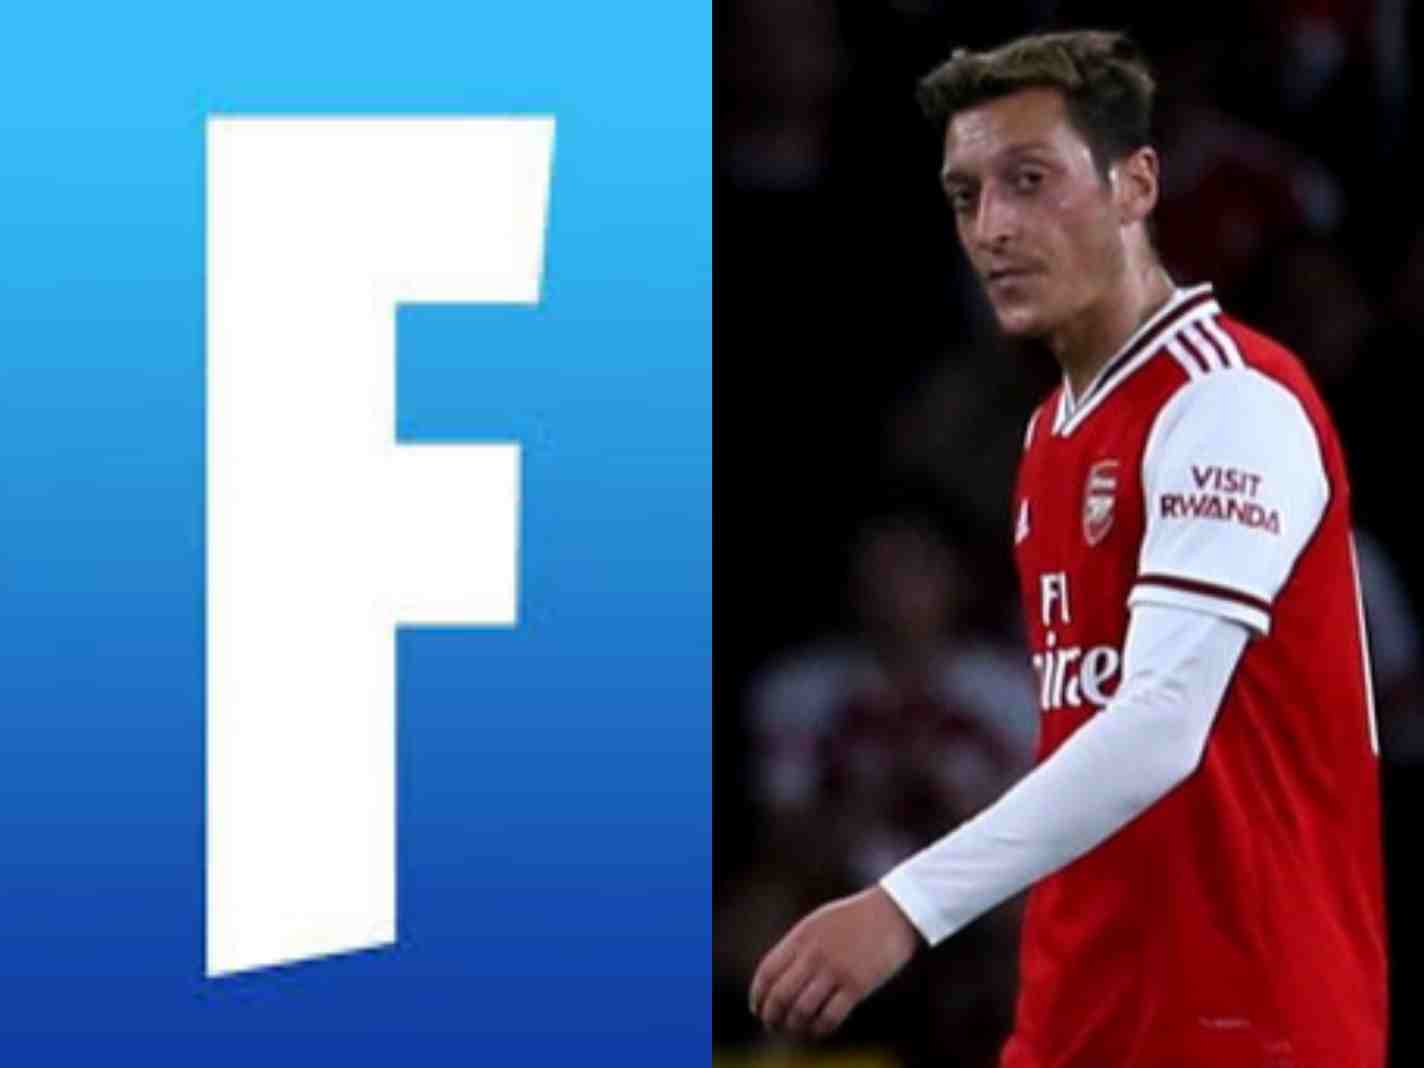 Is Arsenal Striker Mesut Özil The Reincarnation Of Enzo Ferrari